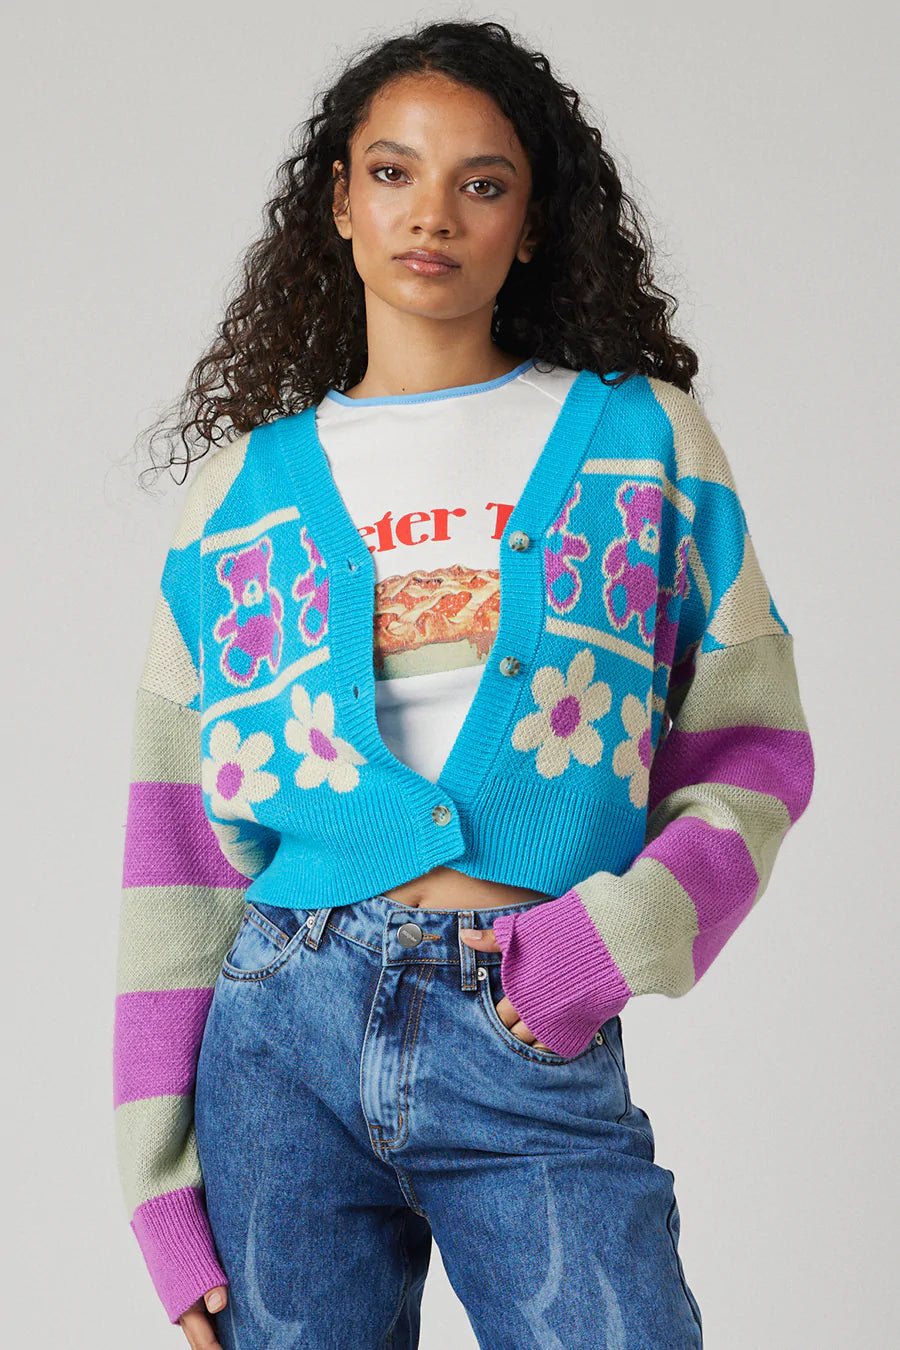 Shop New Girl Order Teddy Bears Picnic Cardigan - Premium Cardigan from New Girl Order Online now at Spoiled Brat 